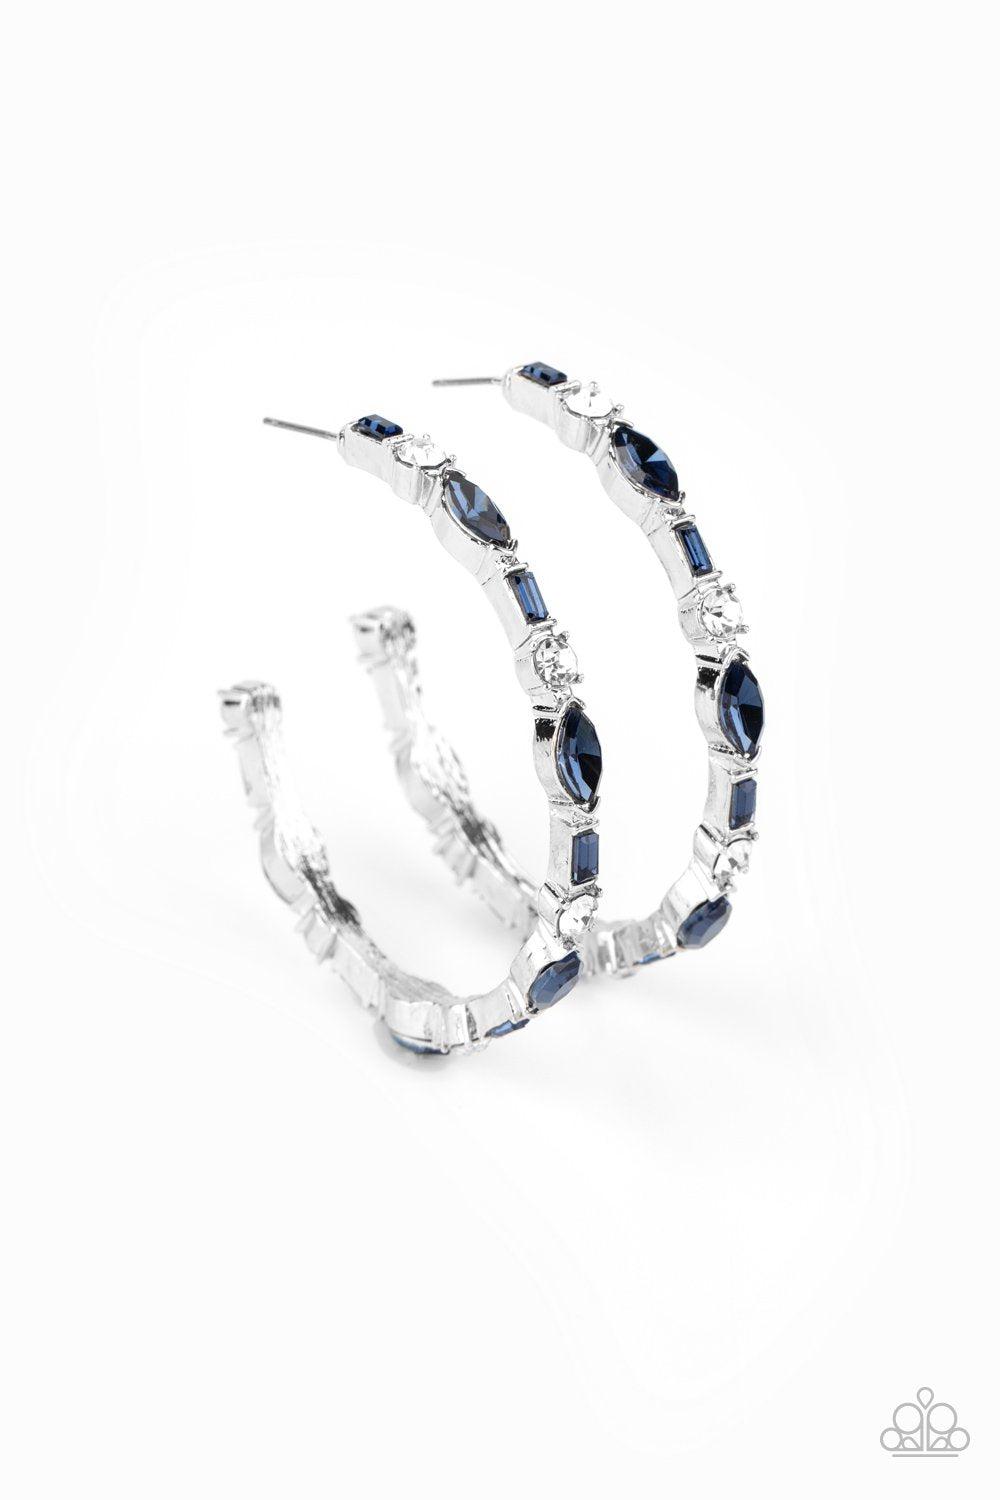 There Goes The Neighborhood Blue Rhinestone Hoop Earrings - Paparazzi Accessories - lightbox -CarasShop.com - $5 Jewelry by Cara Jewels